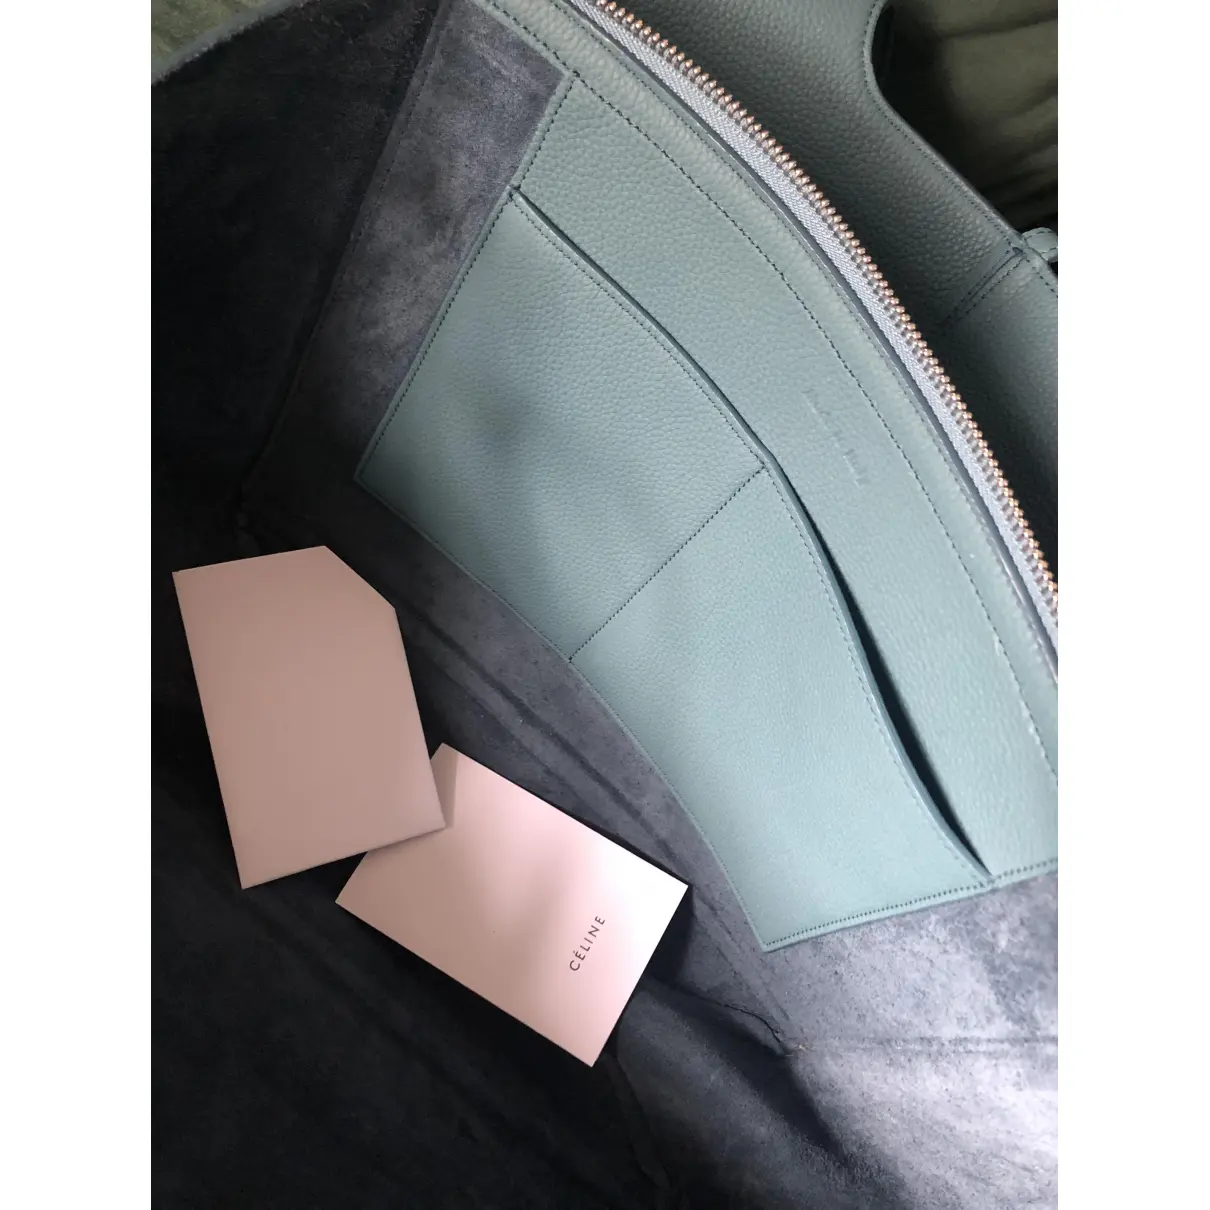 Tri-Fold leather tote Celine